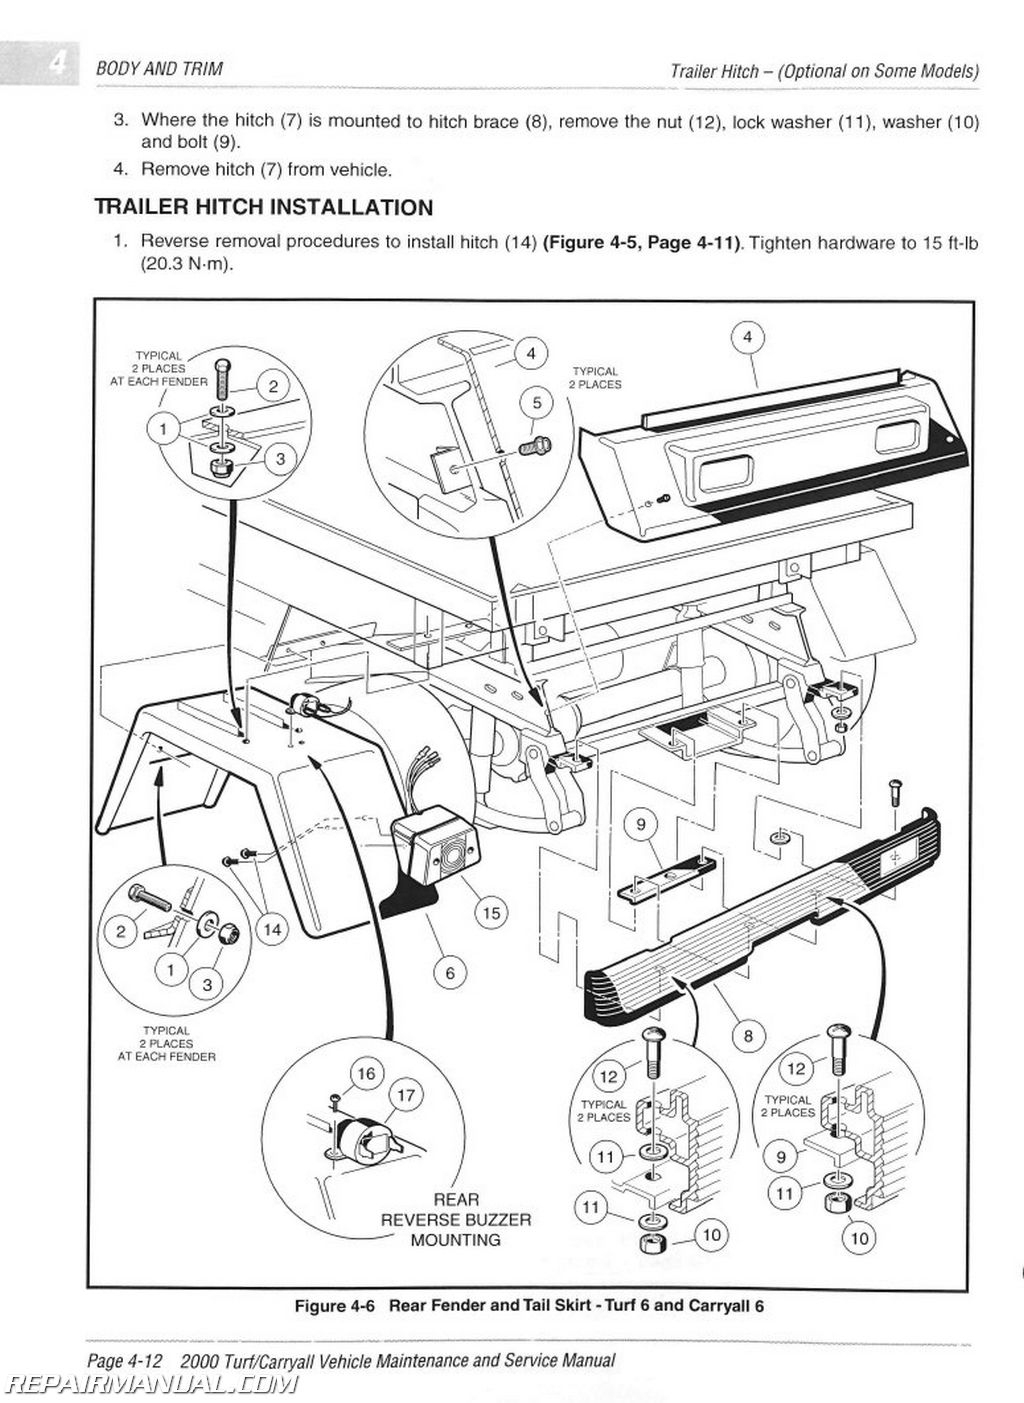 1991 Electric Club Car Wiring Diagram Schematic - Wiring Diagrams Hubs - Club Car Precedent Wiring Diagram